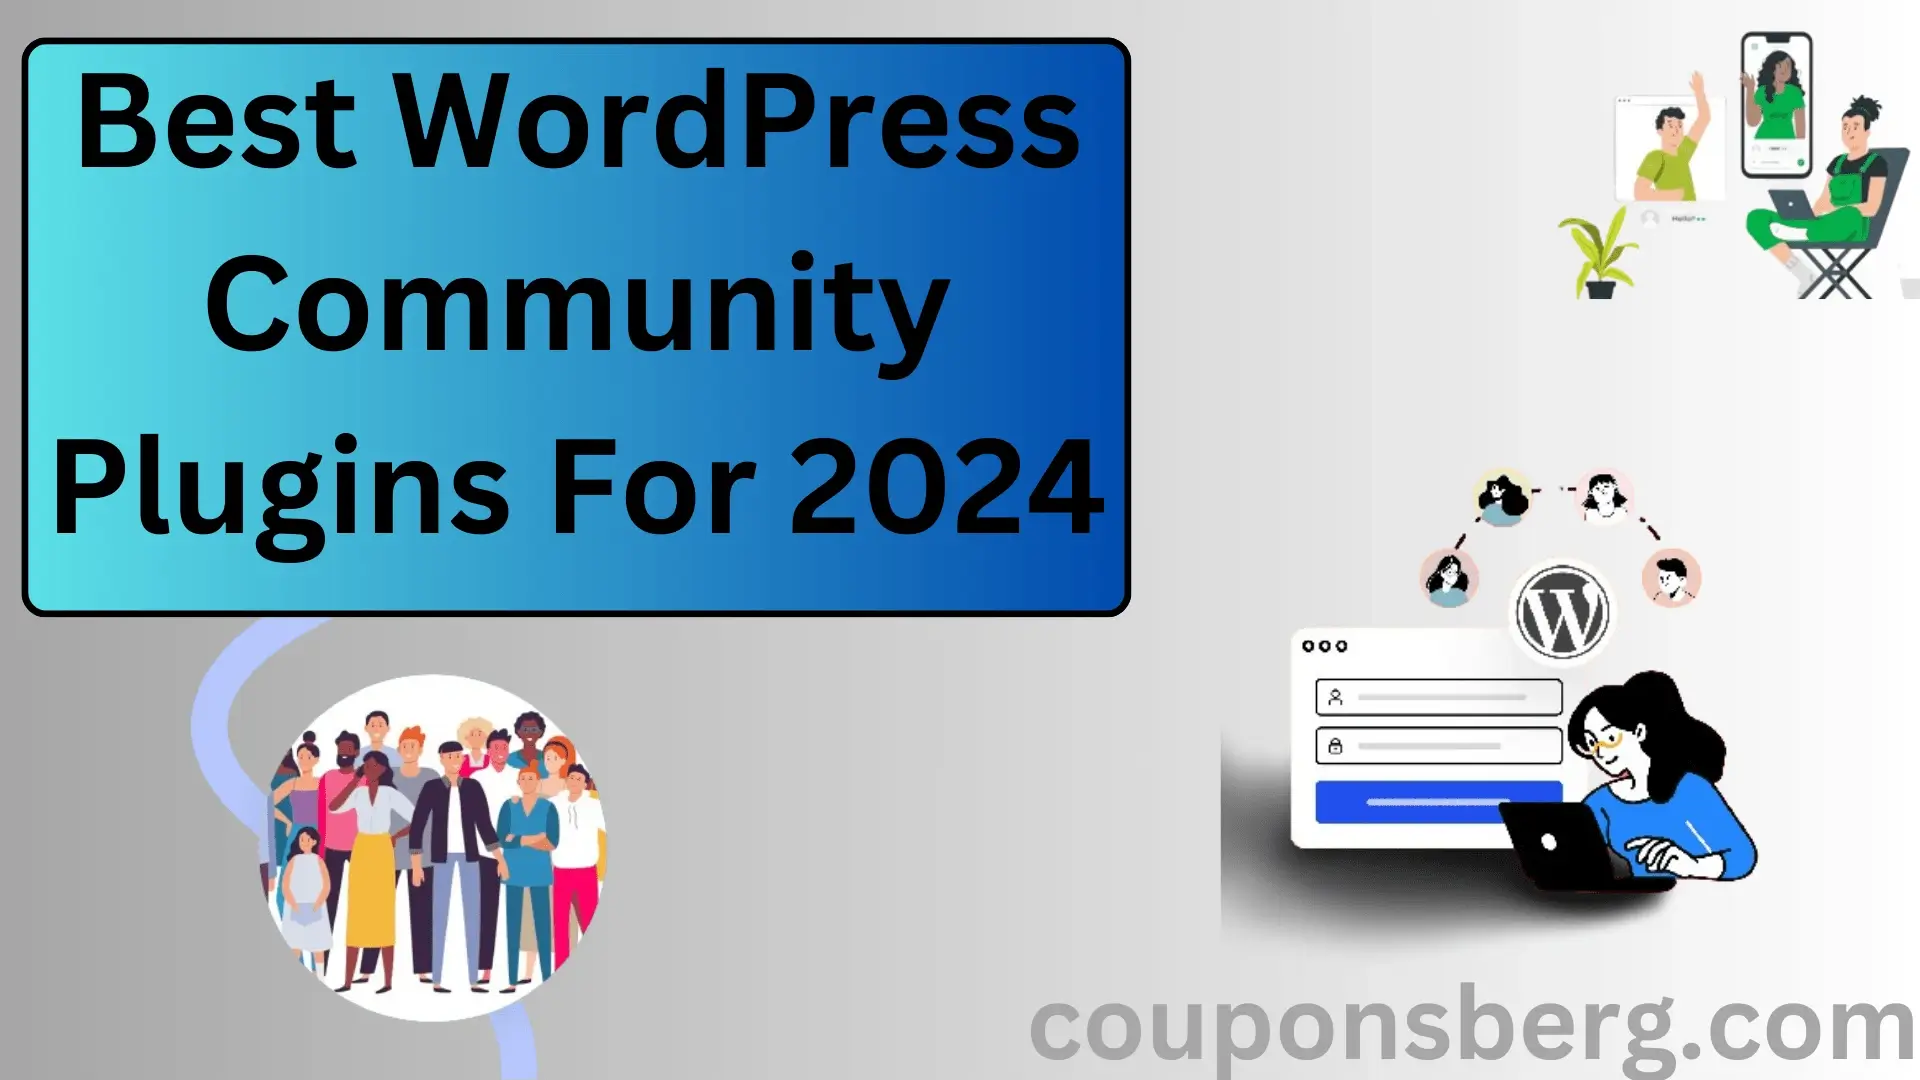 7 Best WordPress Community Plugins For 2024